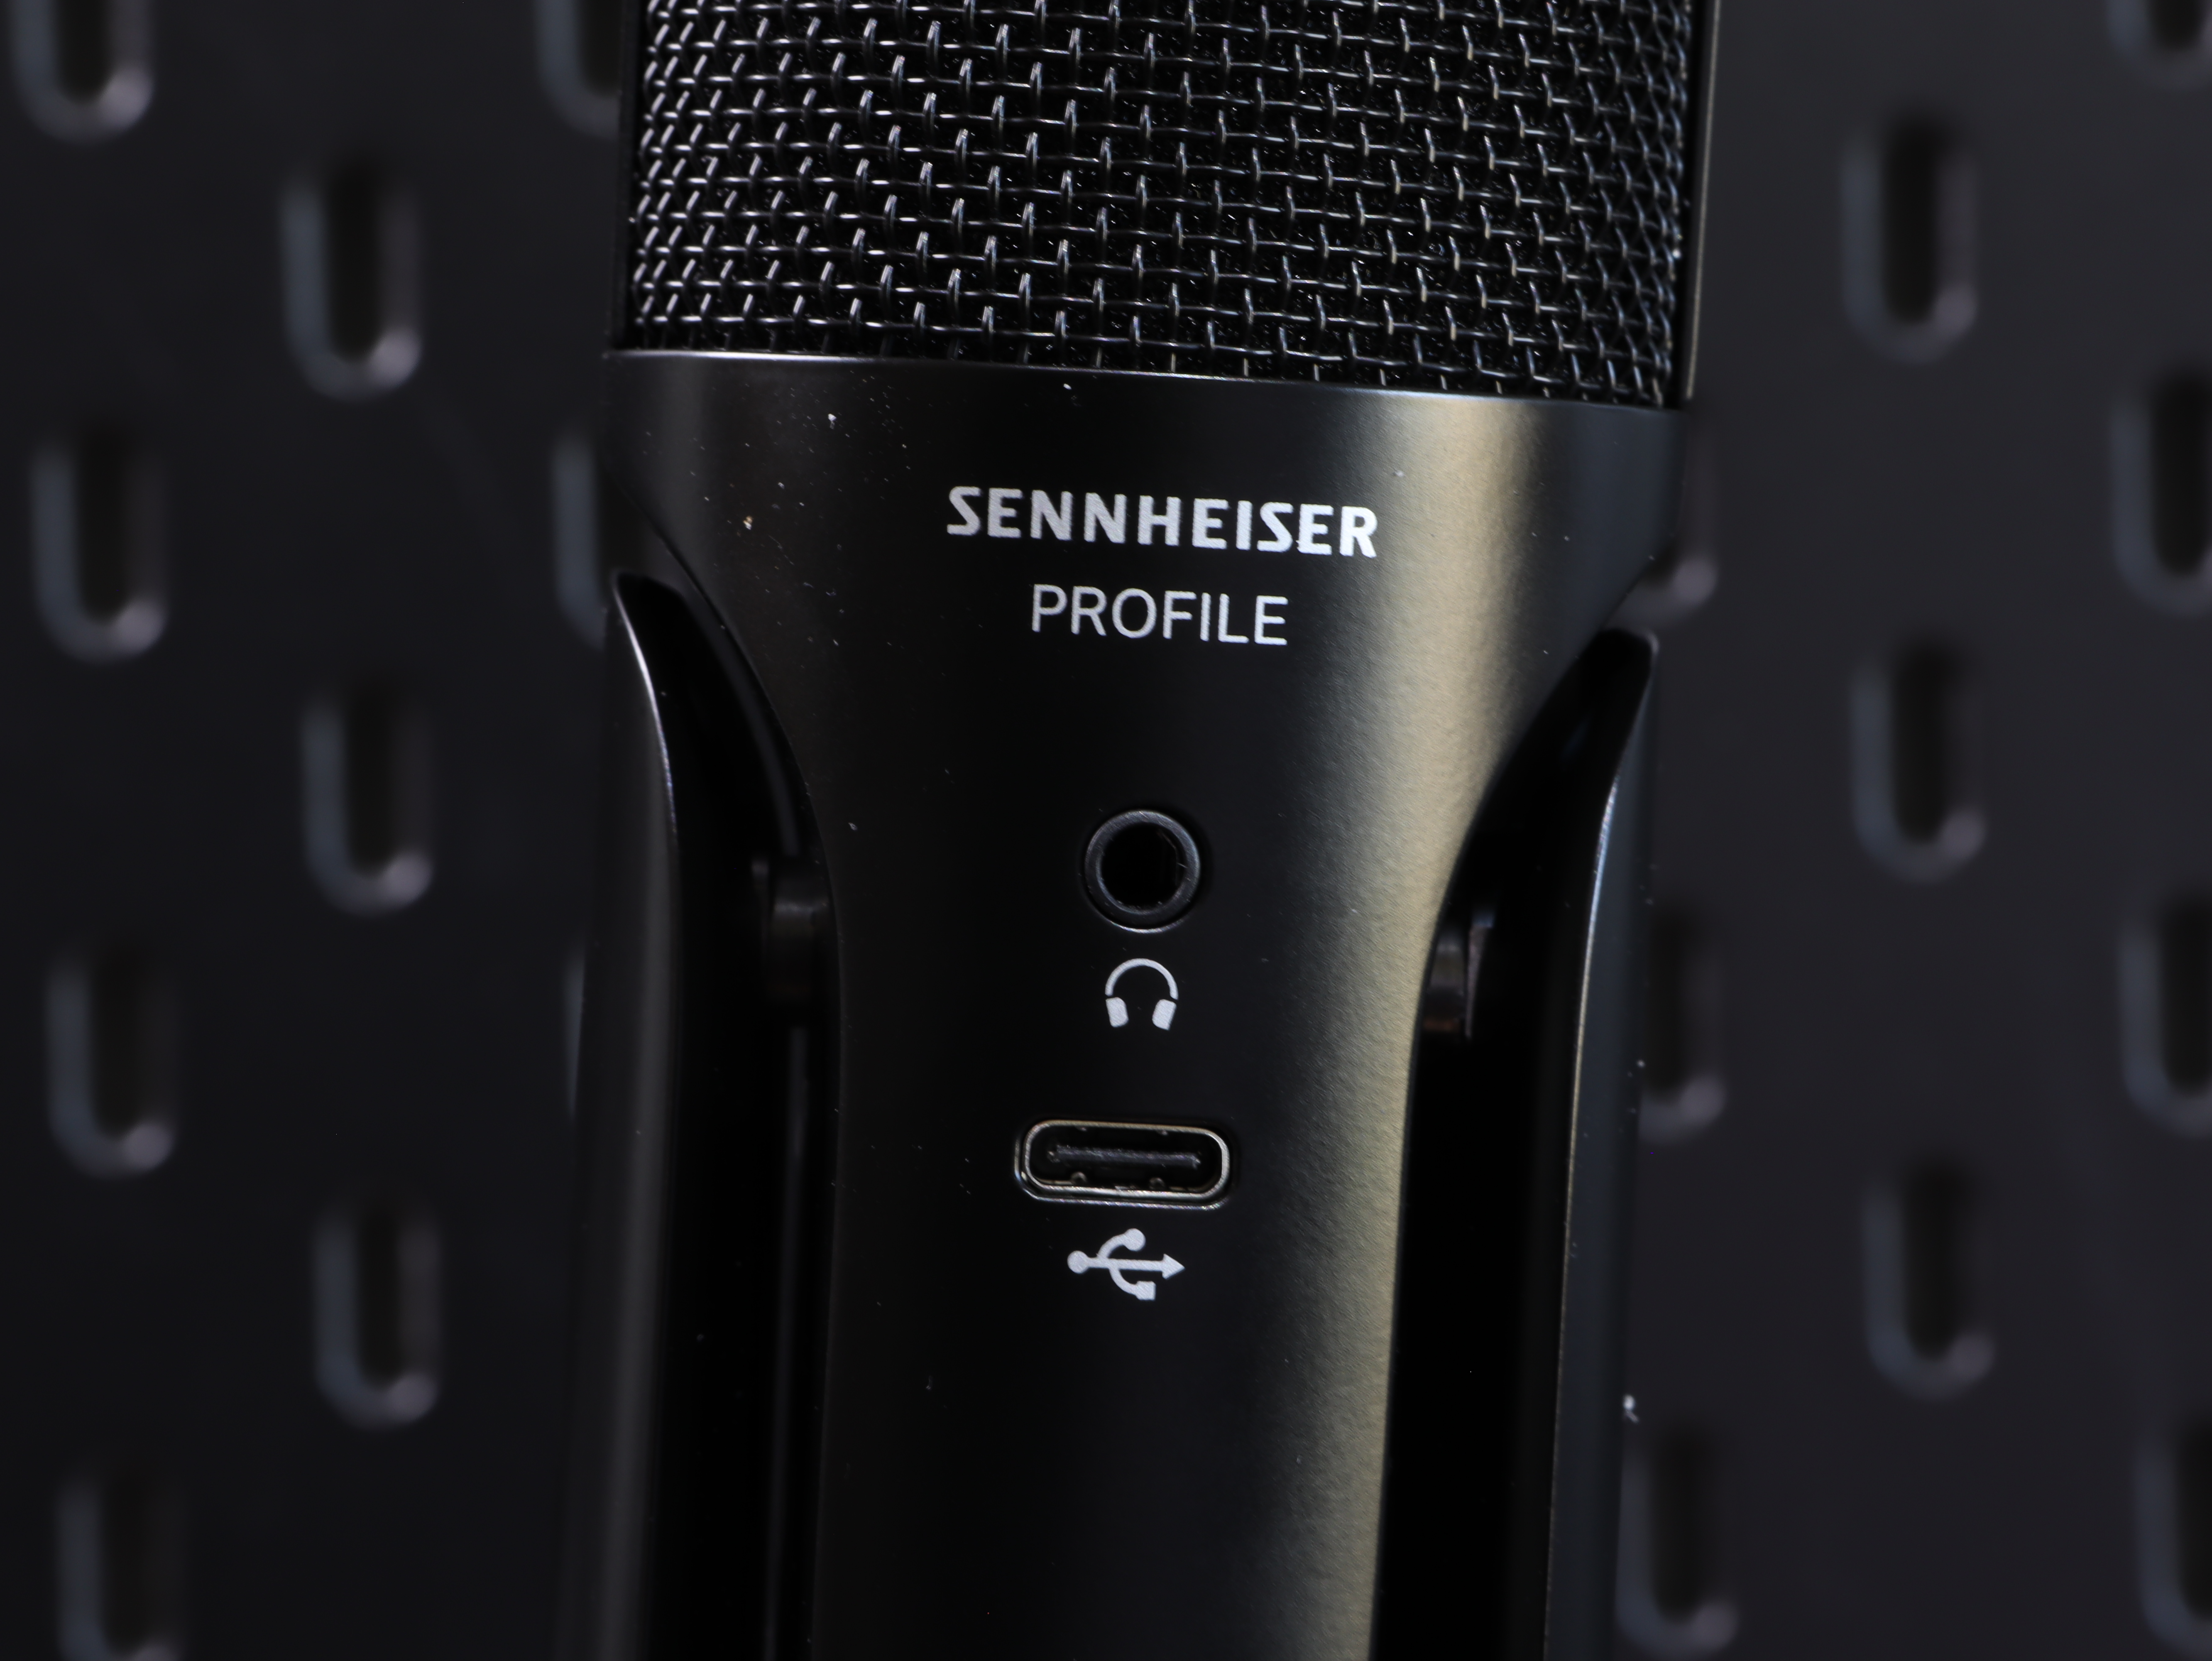 Steuerkapsel Gain Sennheiser Mikrofon-Mix-Profil Premium-Finish-Steuerung Nierencharakteristik Streaming-Set Kondensator USB.JPG